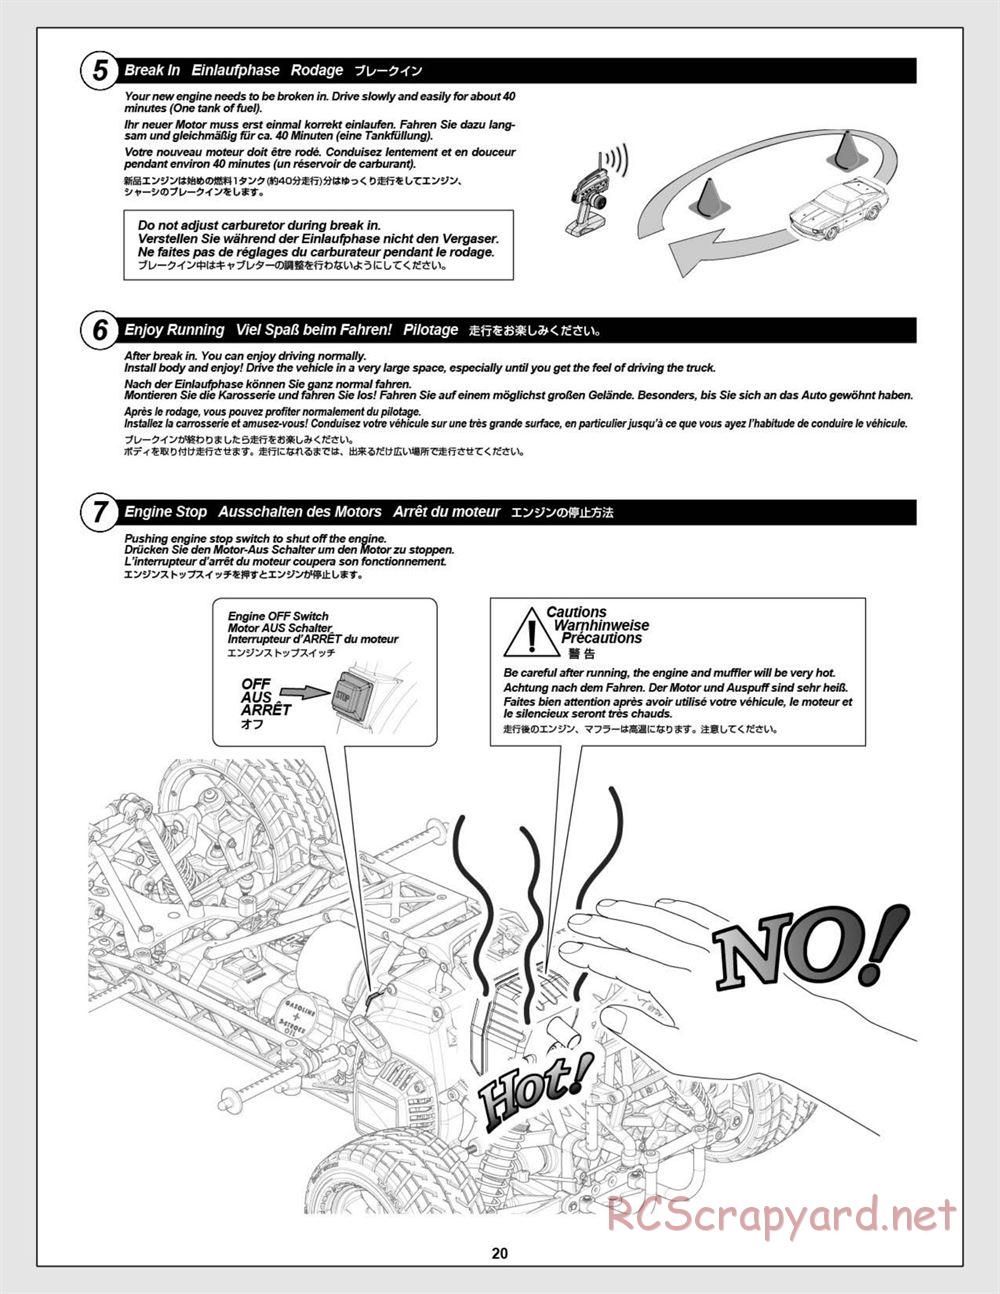 HPI - Baja 5R - Manual - Page 20